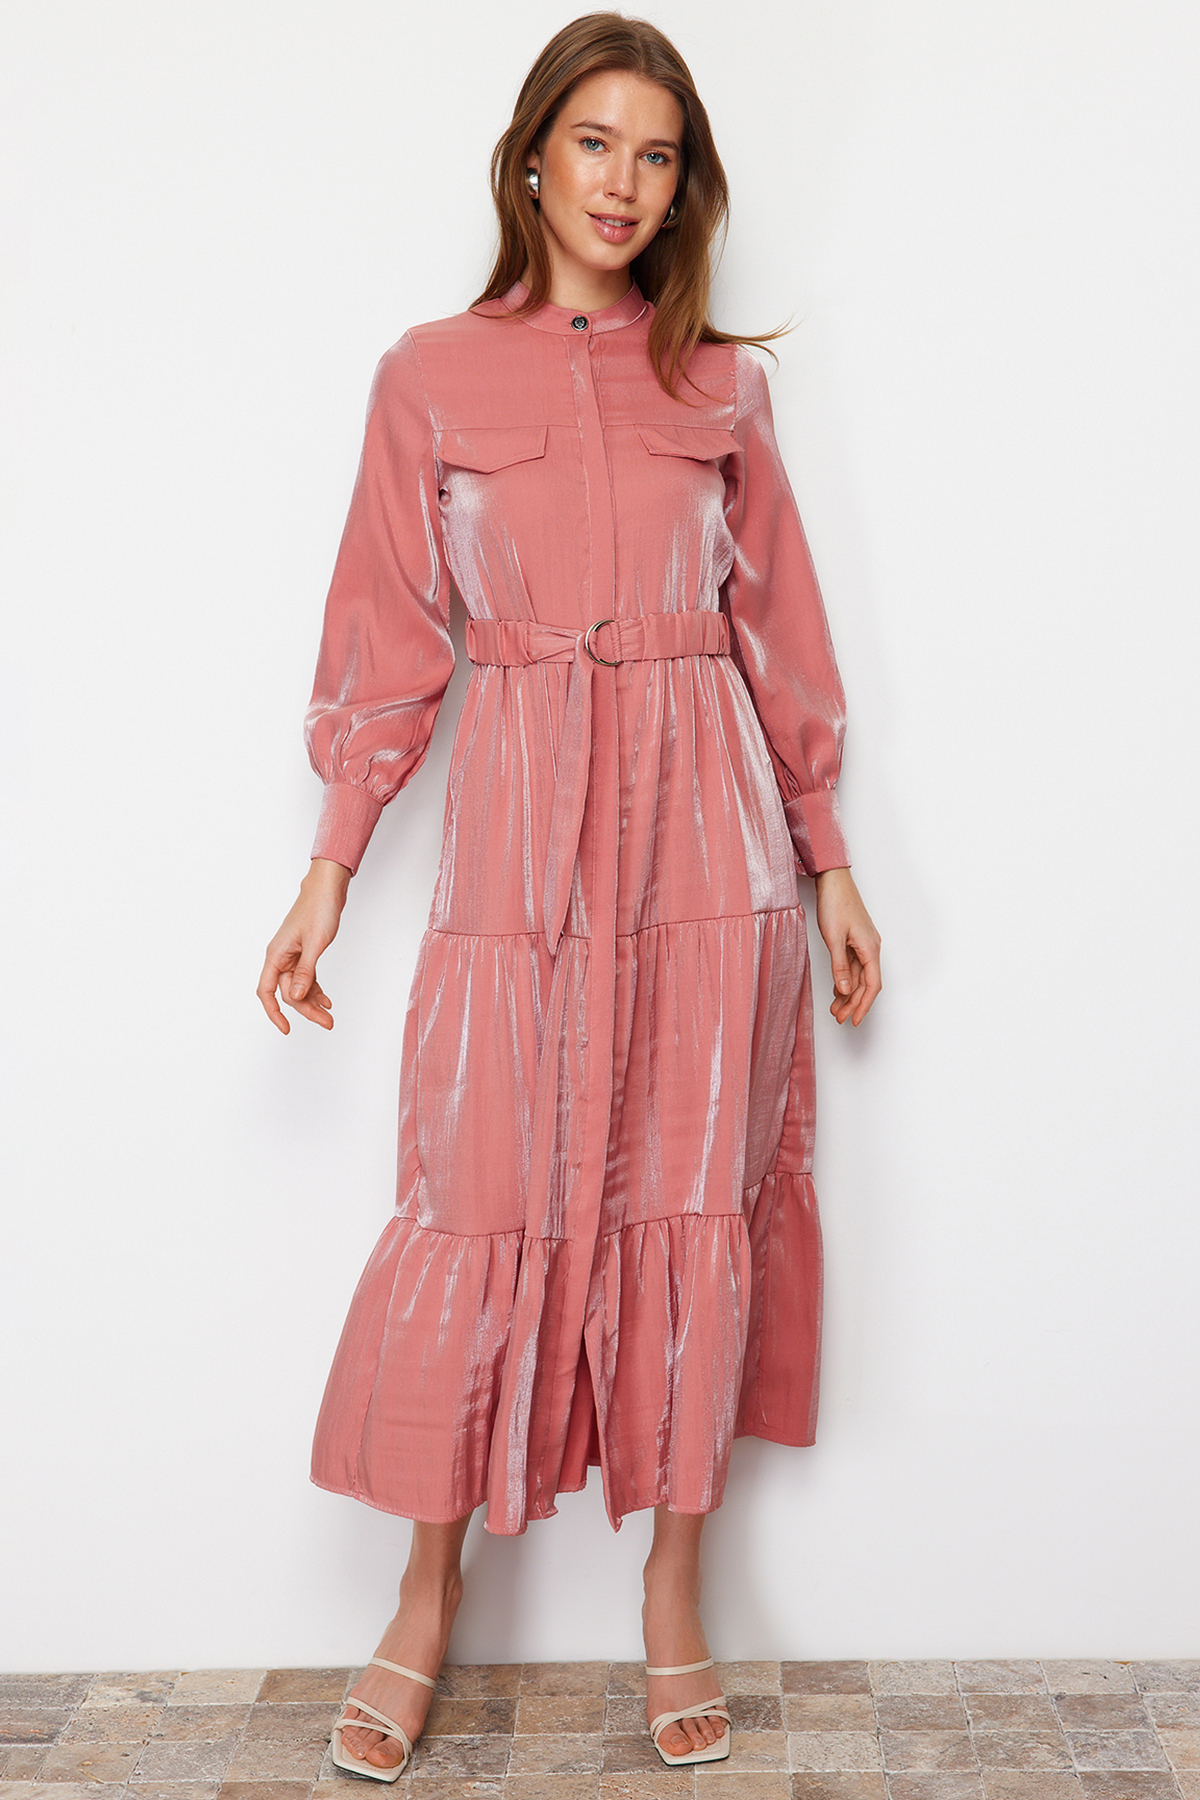 Trendyol Pale Pink Shiny Satin Belt Detailed Skirt Frilly Woven Dress